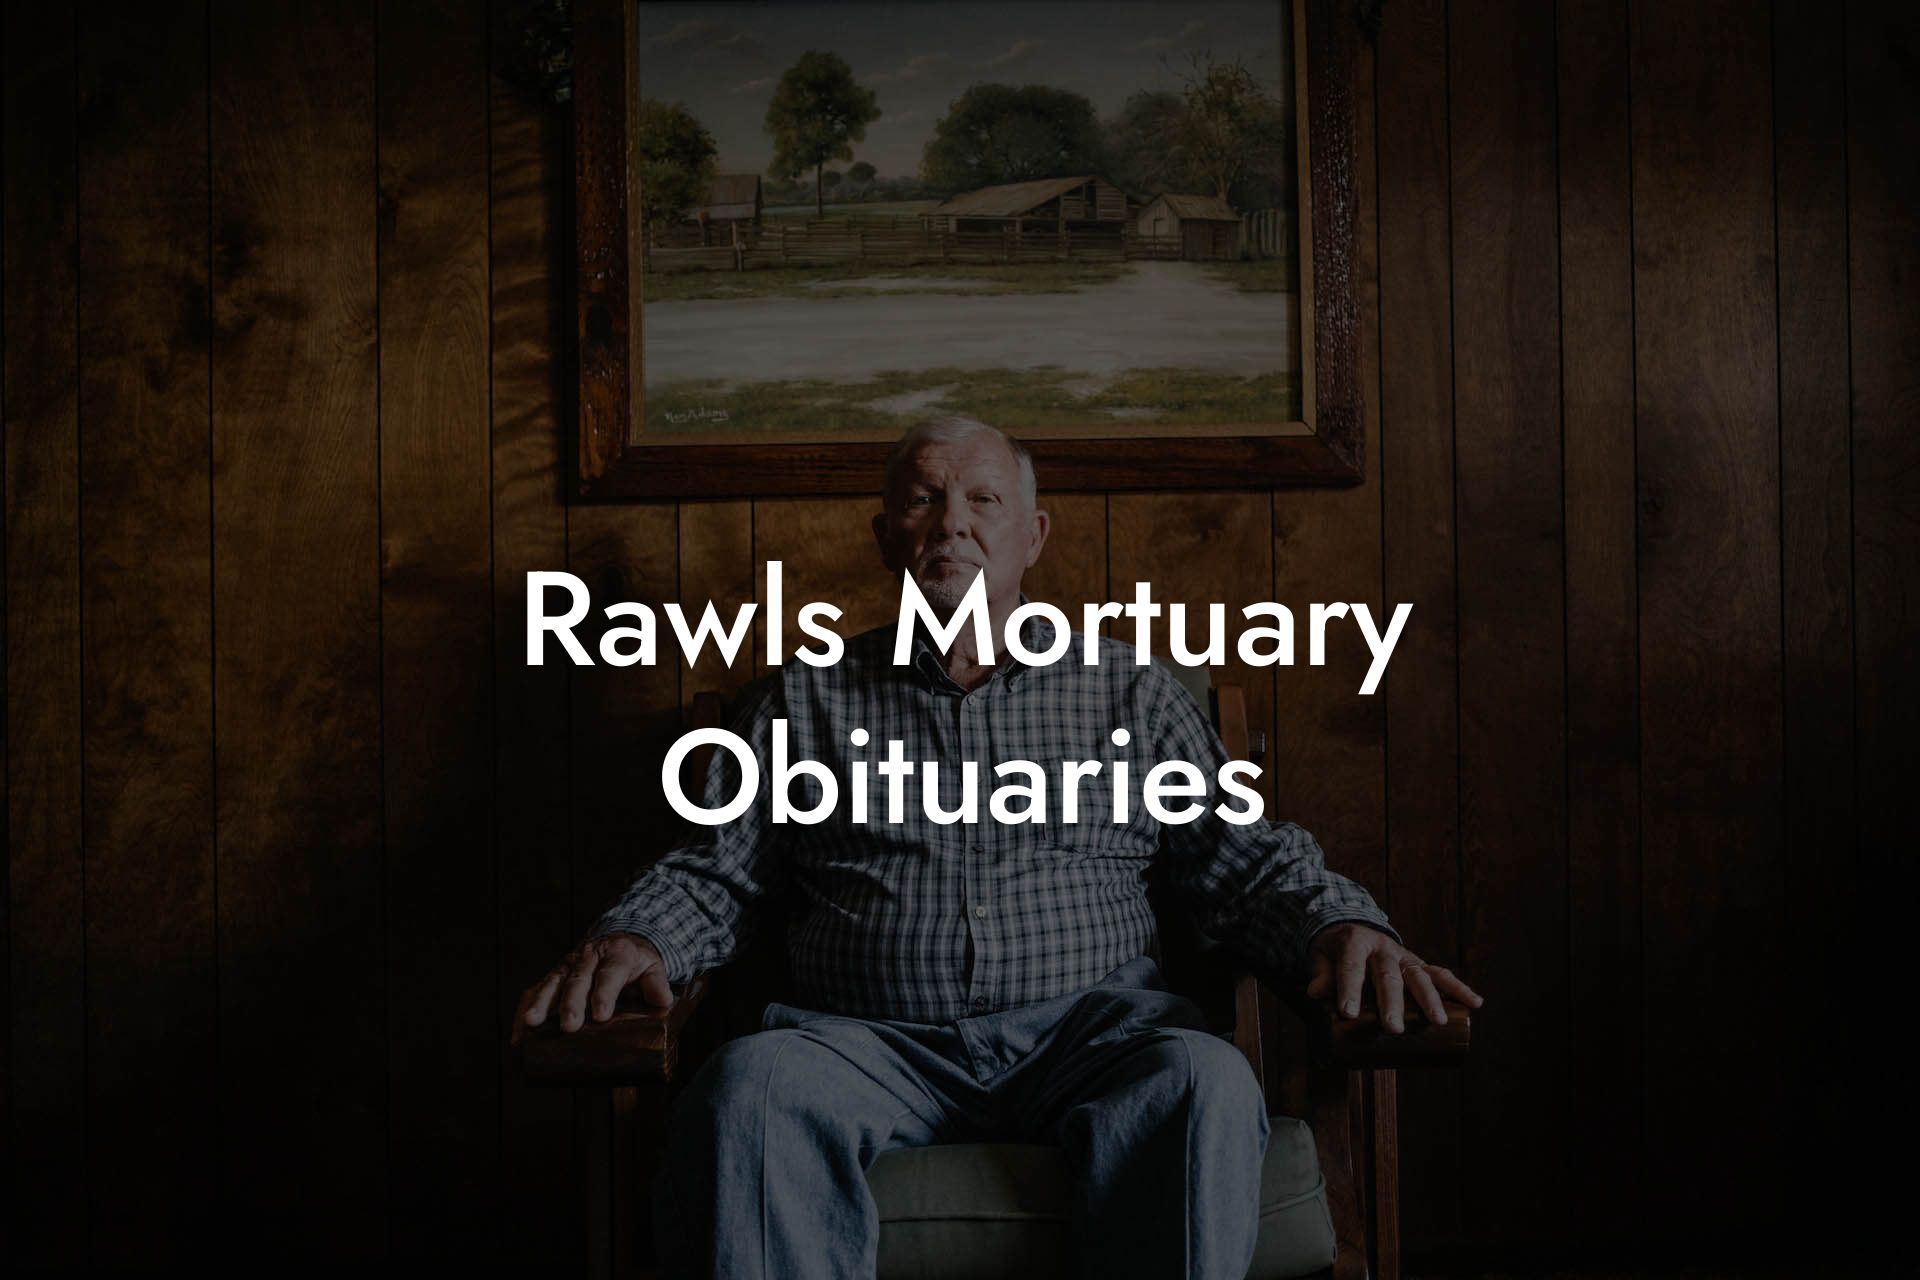 Rawls Mortuary Obituaries